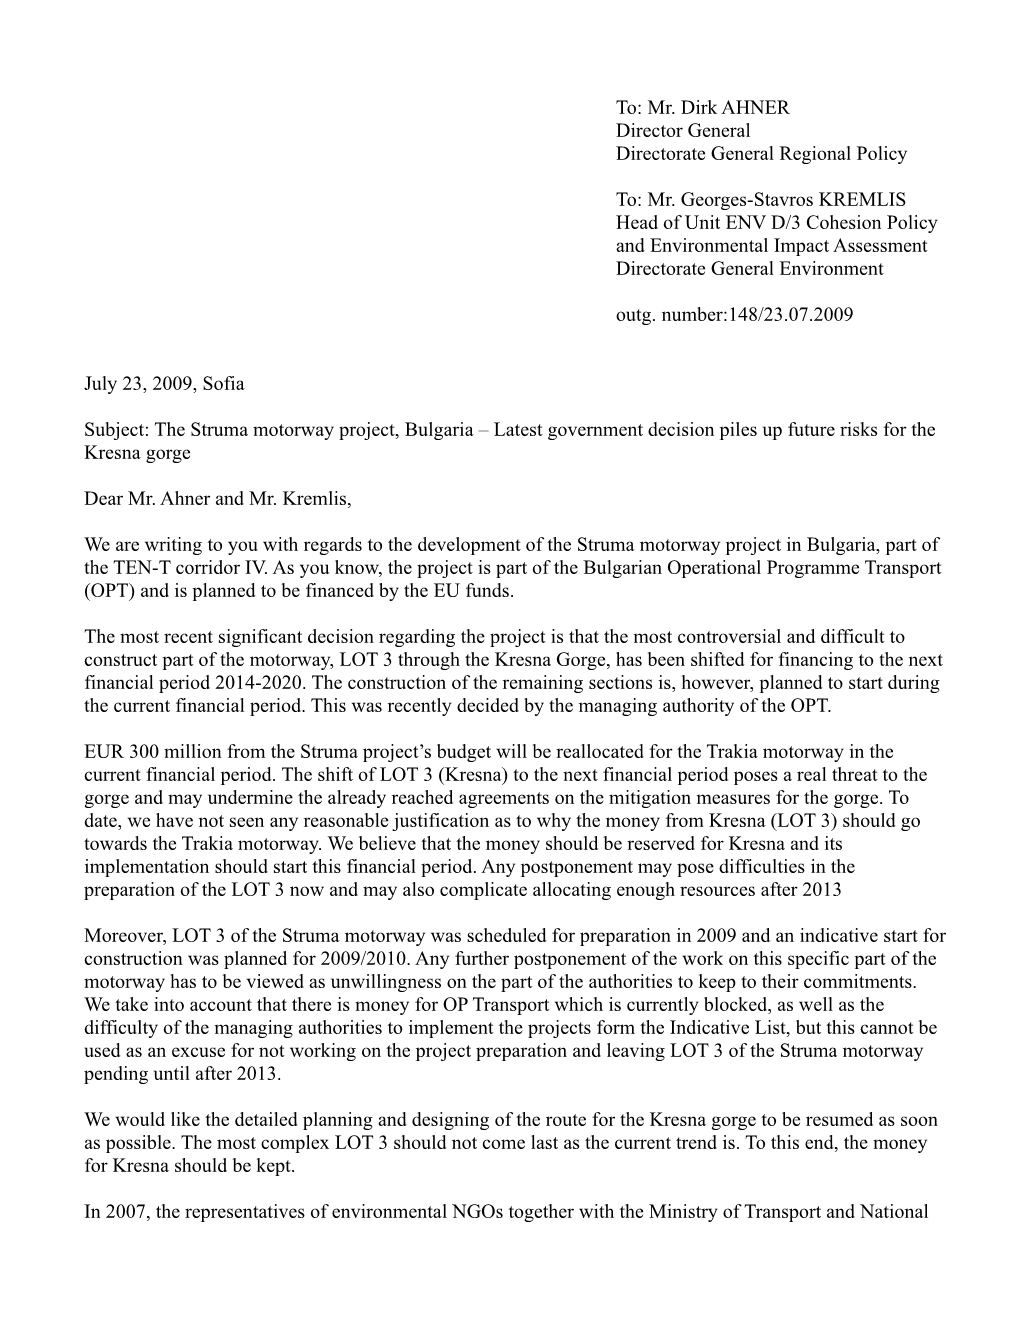 Letter to EC RE Kresna Gorge Motorway Financing